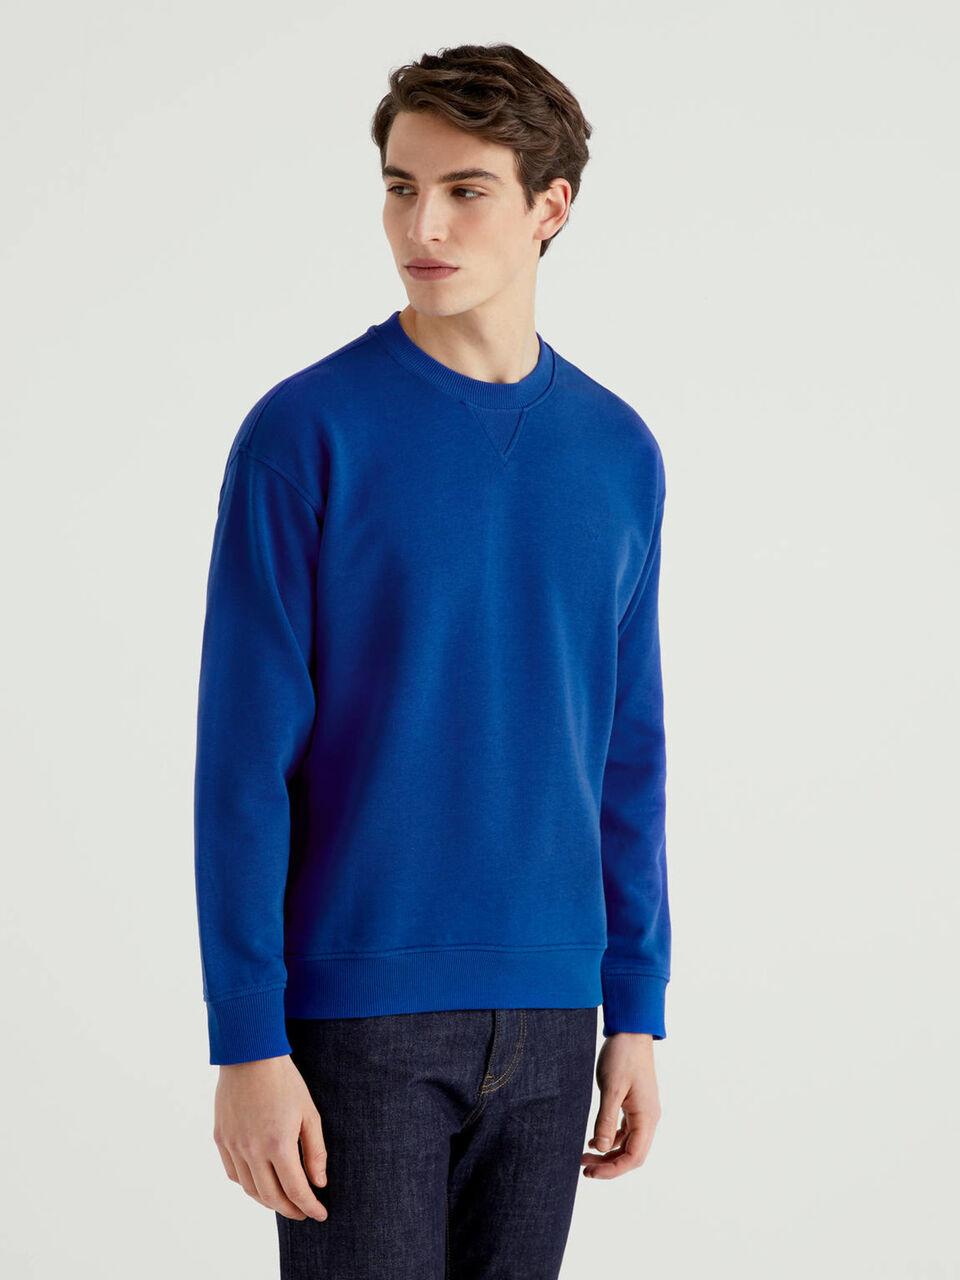 Light blue unisex sweatshirt